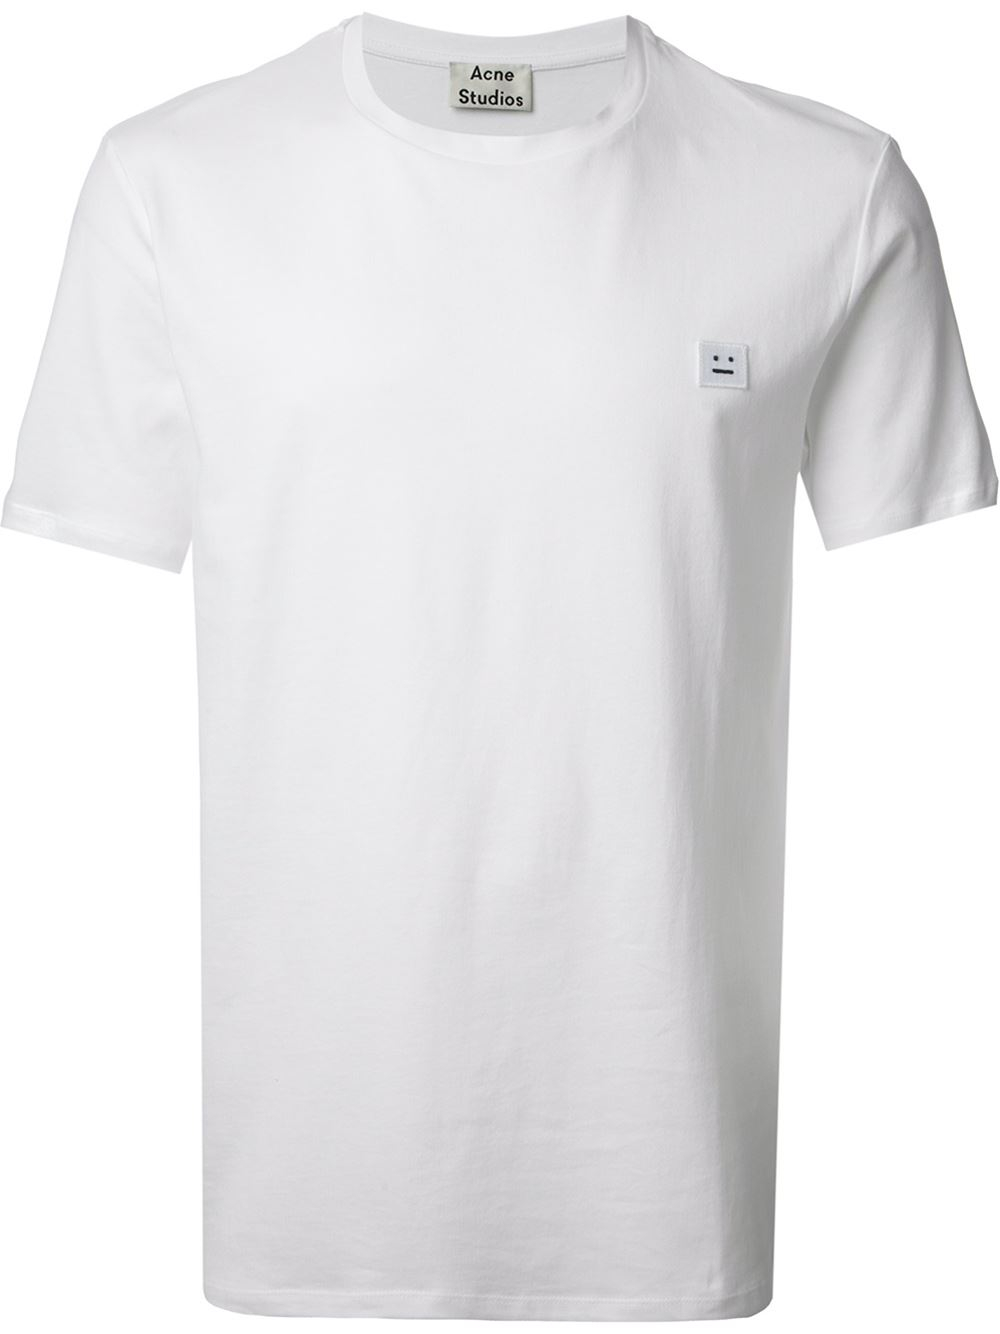 Acne Studios 'Measure-Face Badge' T-Shirt in White for Men - Lyst